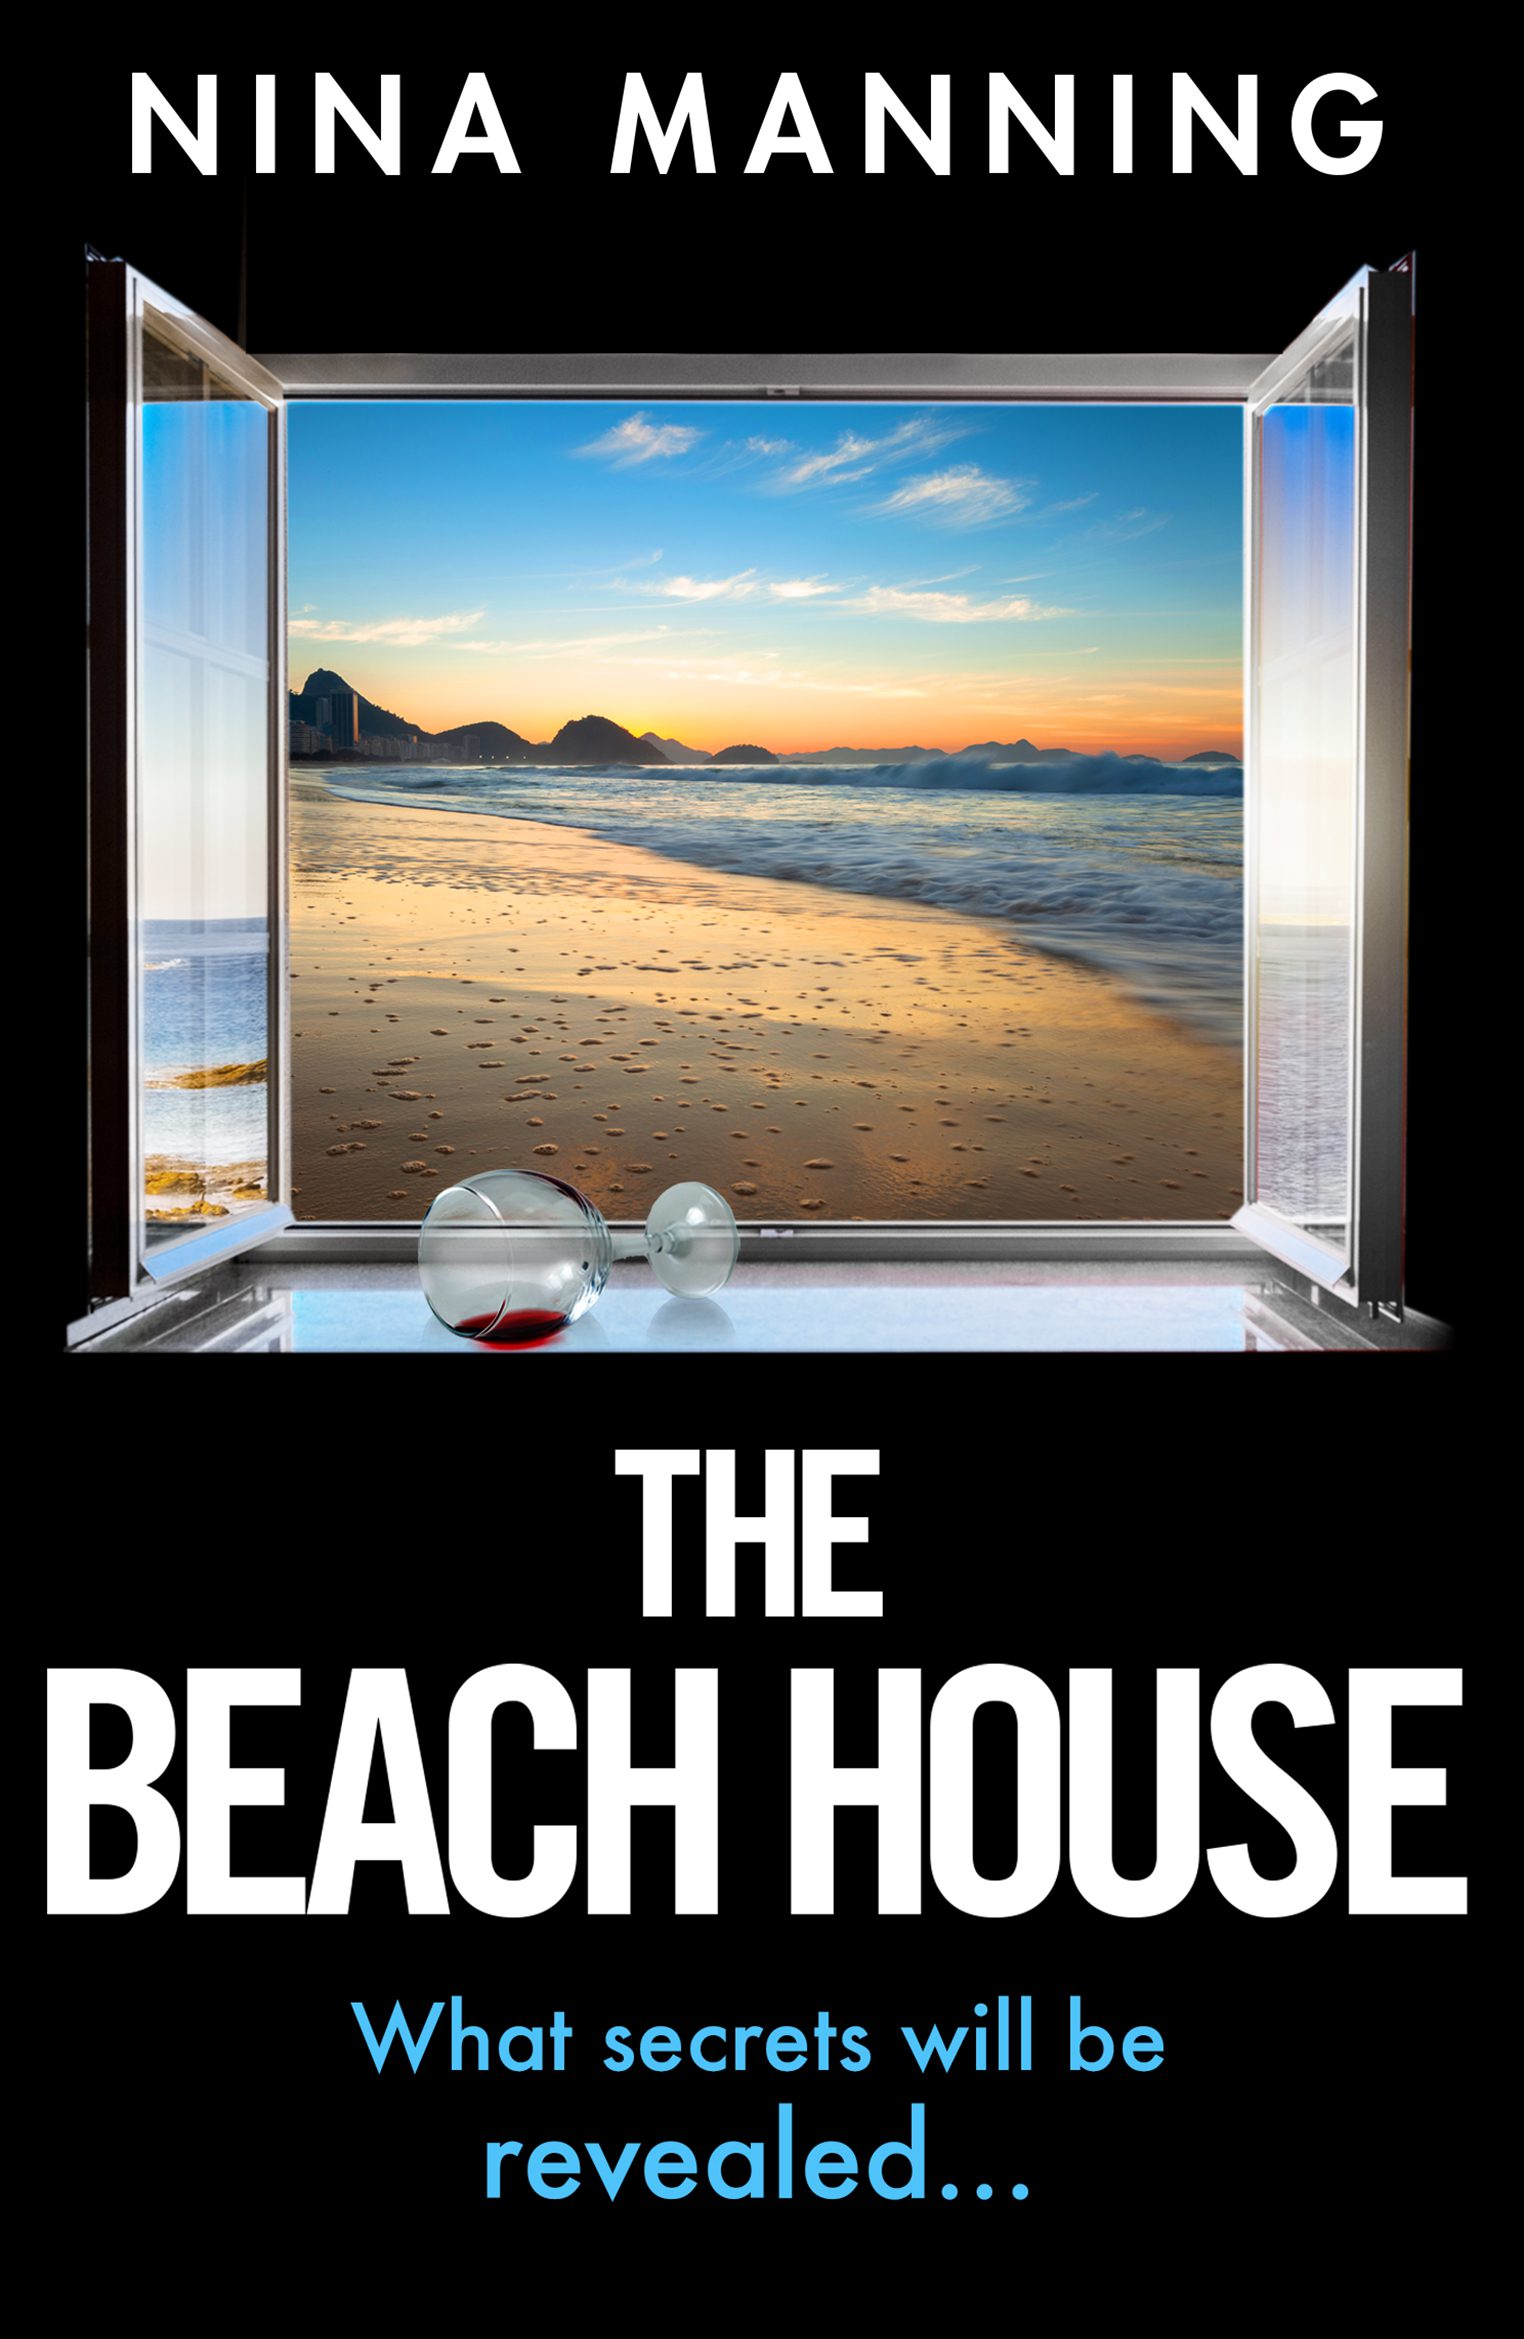 The Beach House book cover